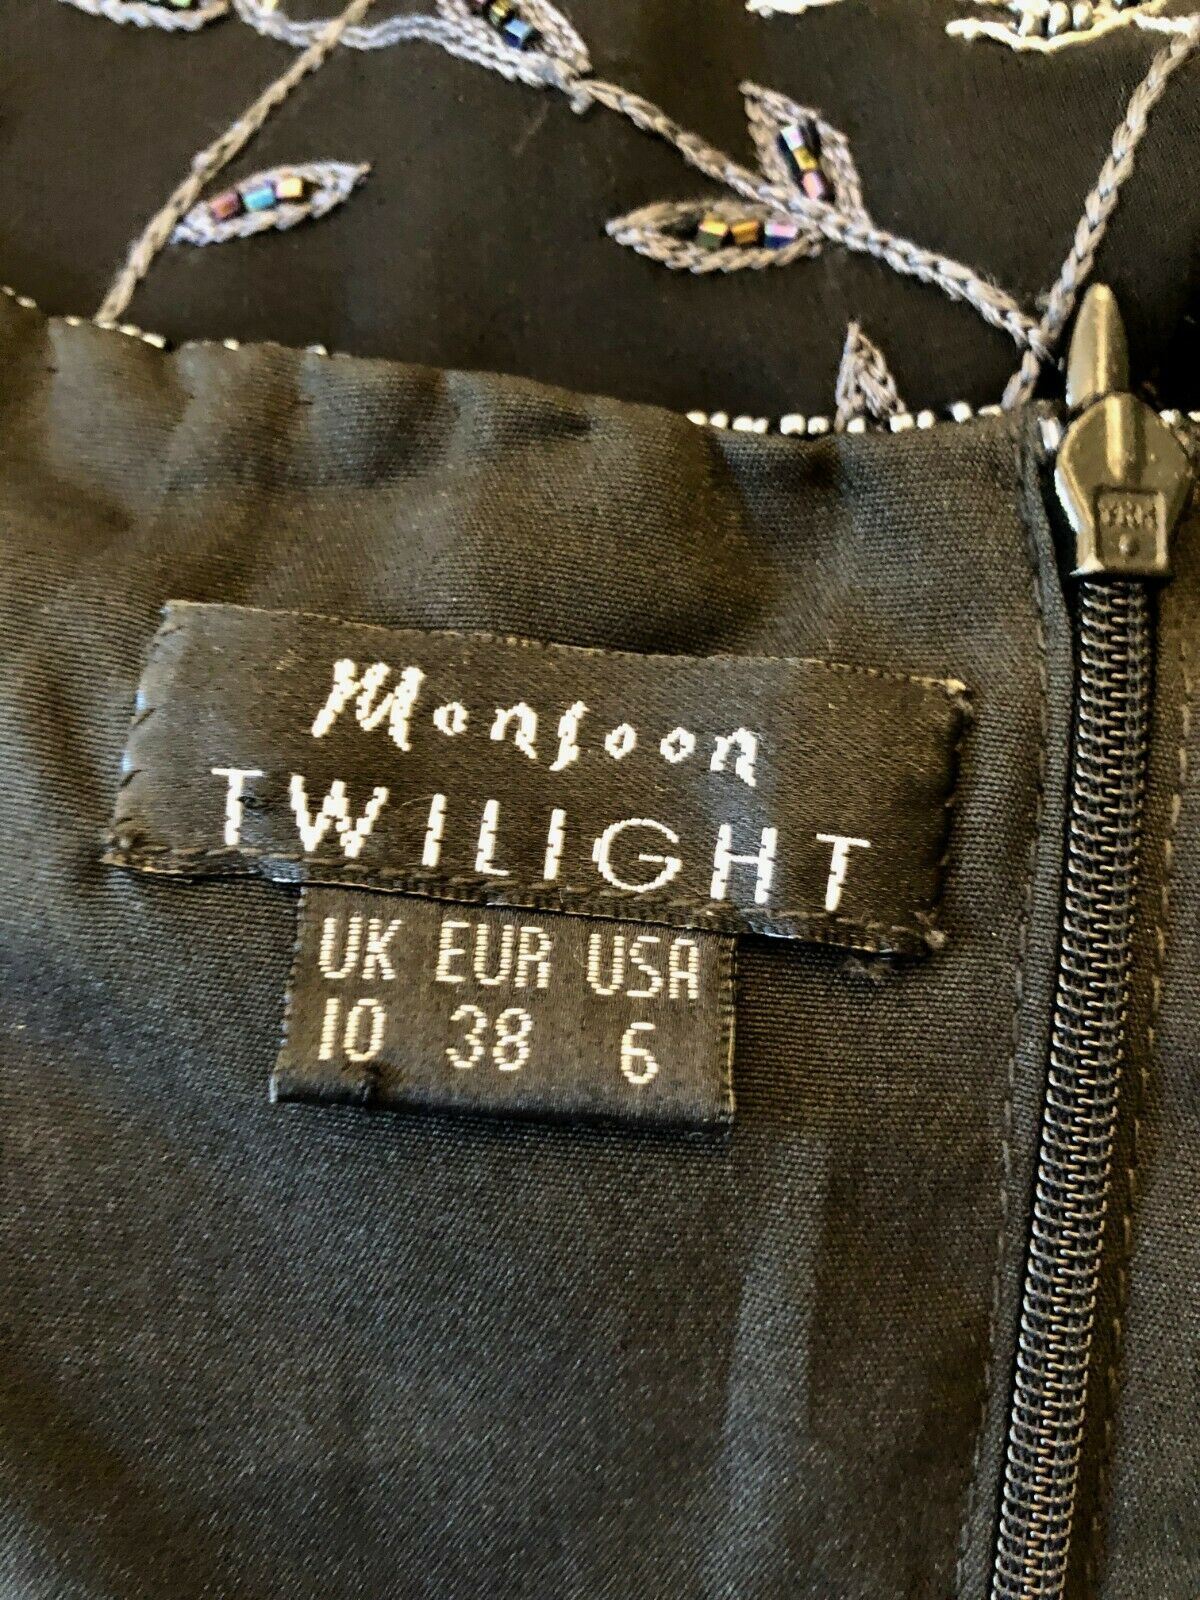 Monsoon Twilight Black Vintage Silk Beaded Skirt & Top Flapper Dress UK 10 US 6 EU 38 Timeless Fashions